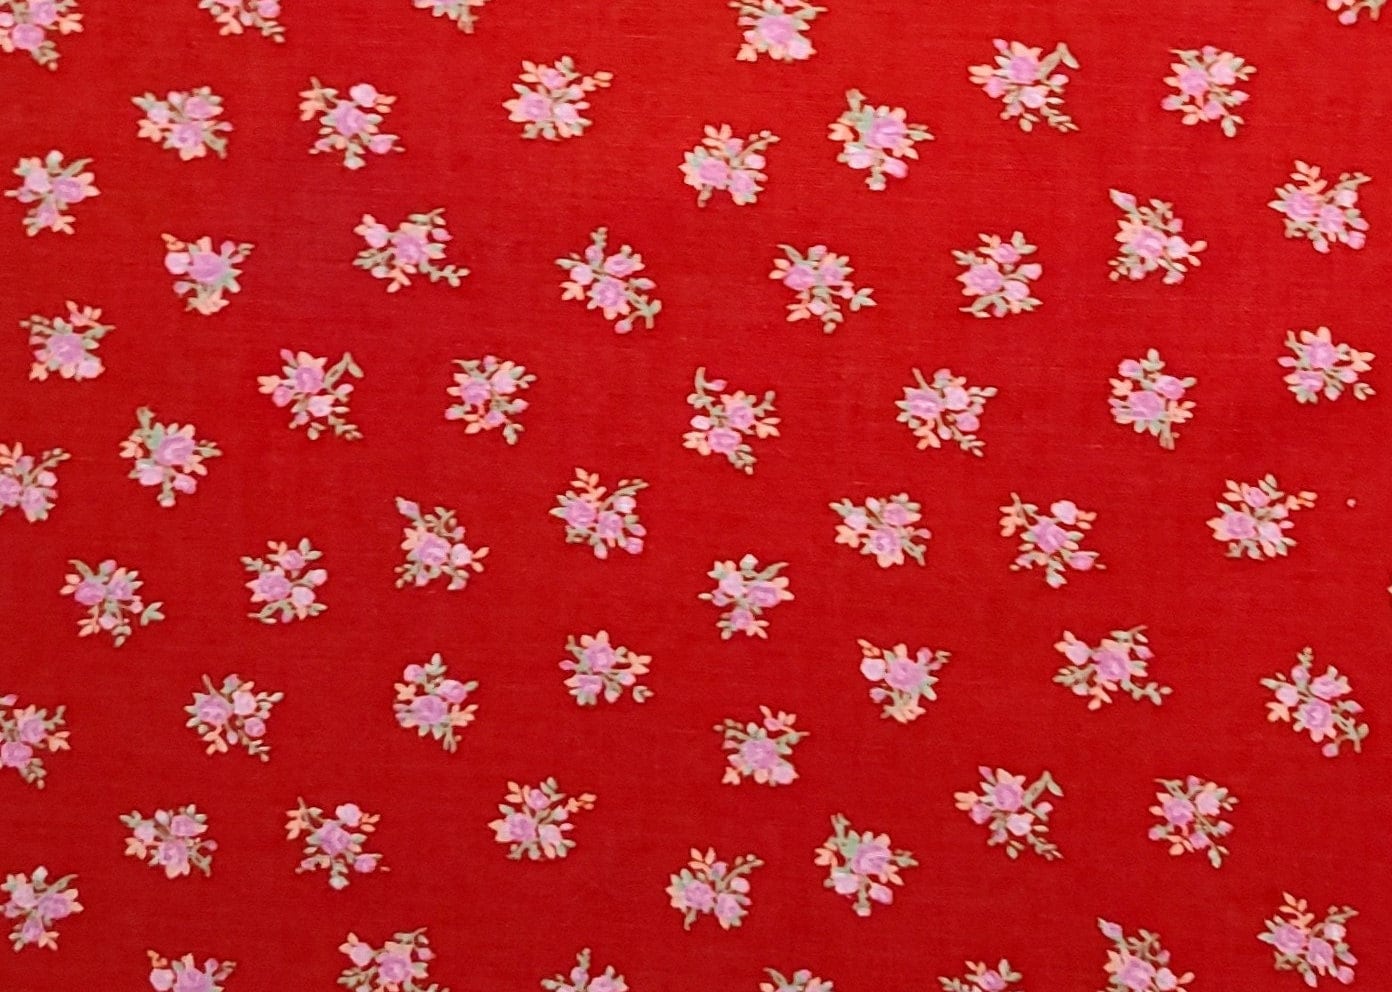 Peter Pan Fabrics - Red Fabric / Pink, White, Yellow Tossed Flower Print